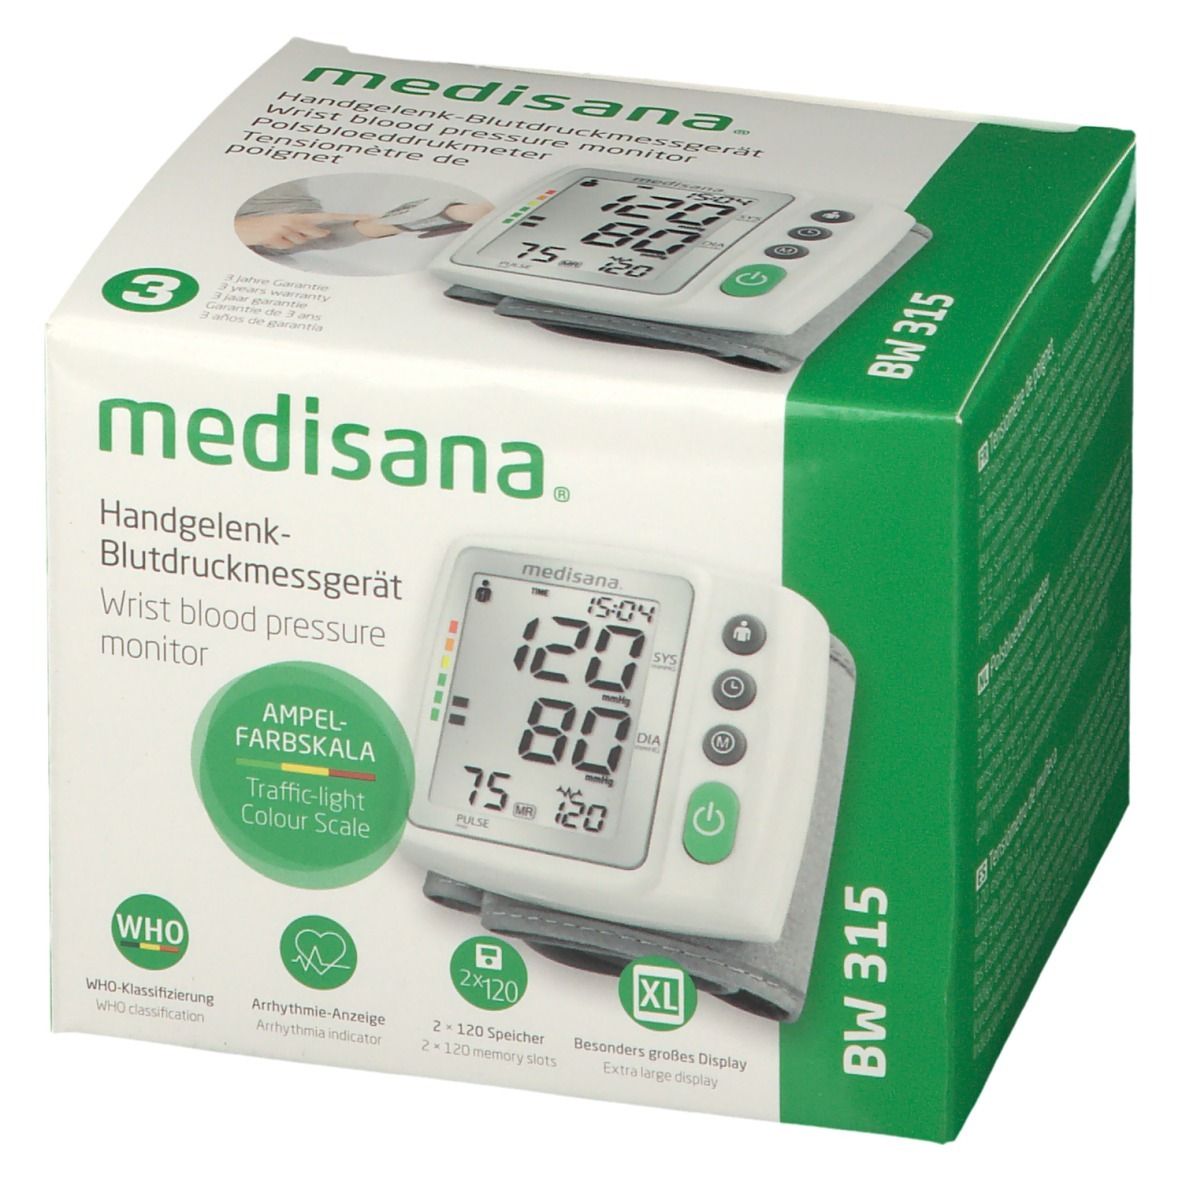 - Handgelenk-Blutdruckmessgerät 315 Medisana 1 BW SHOP St APOTHEKE